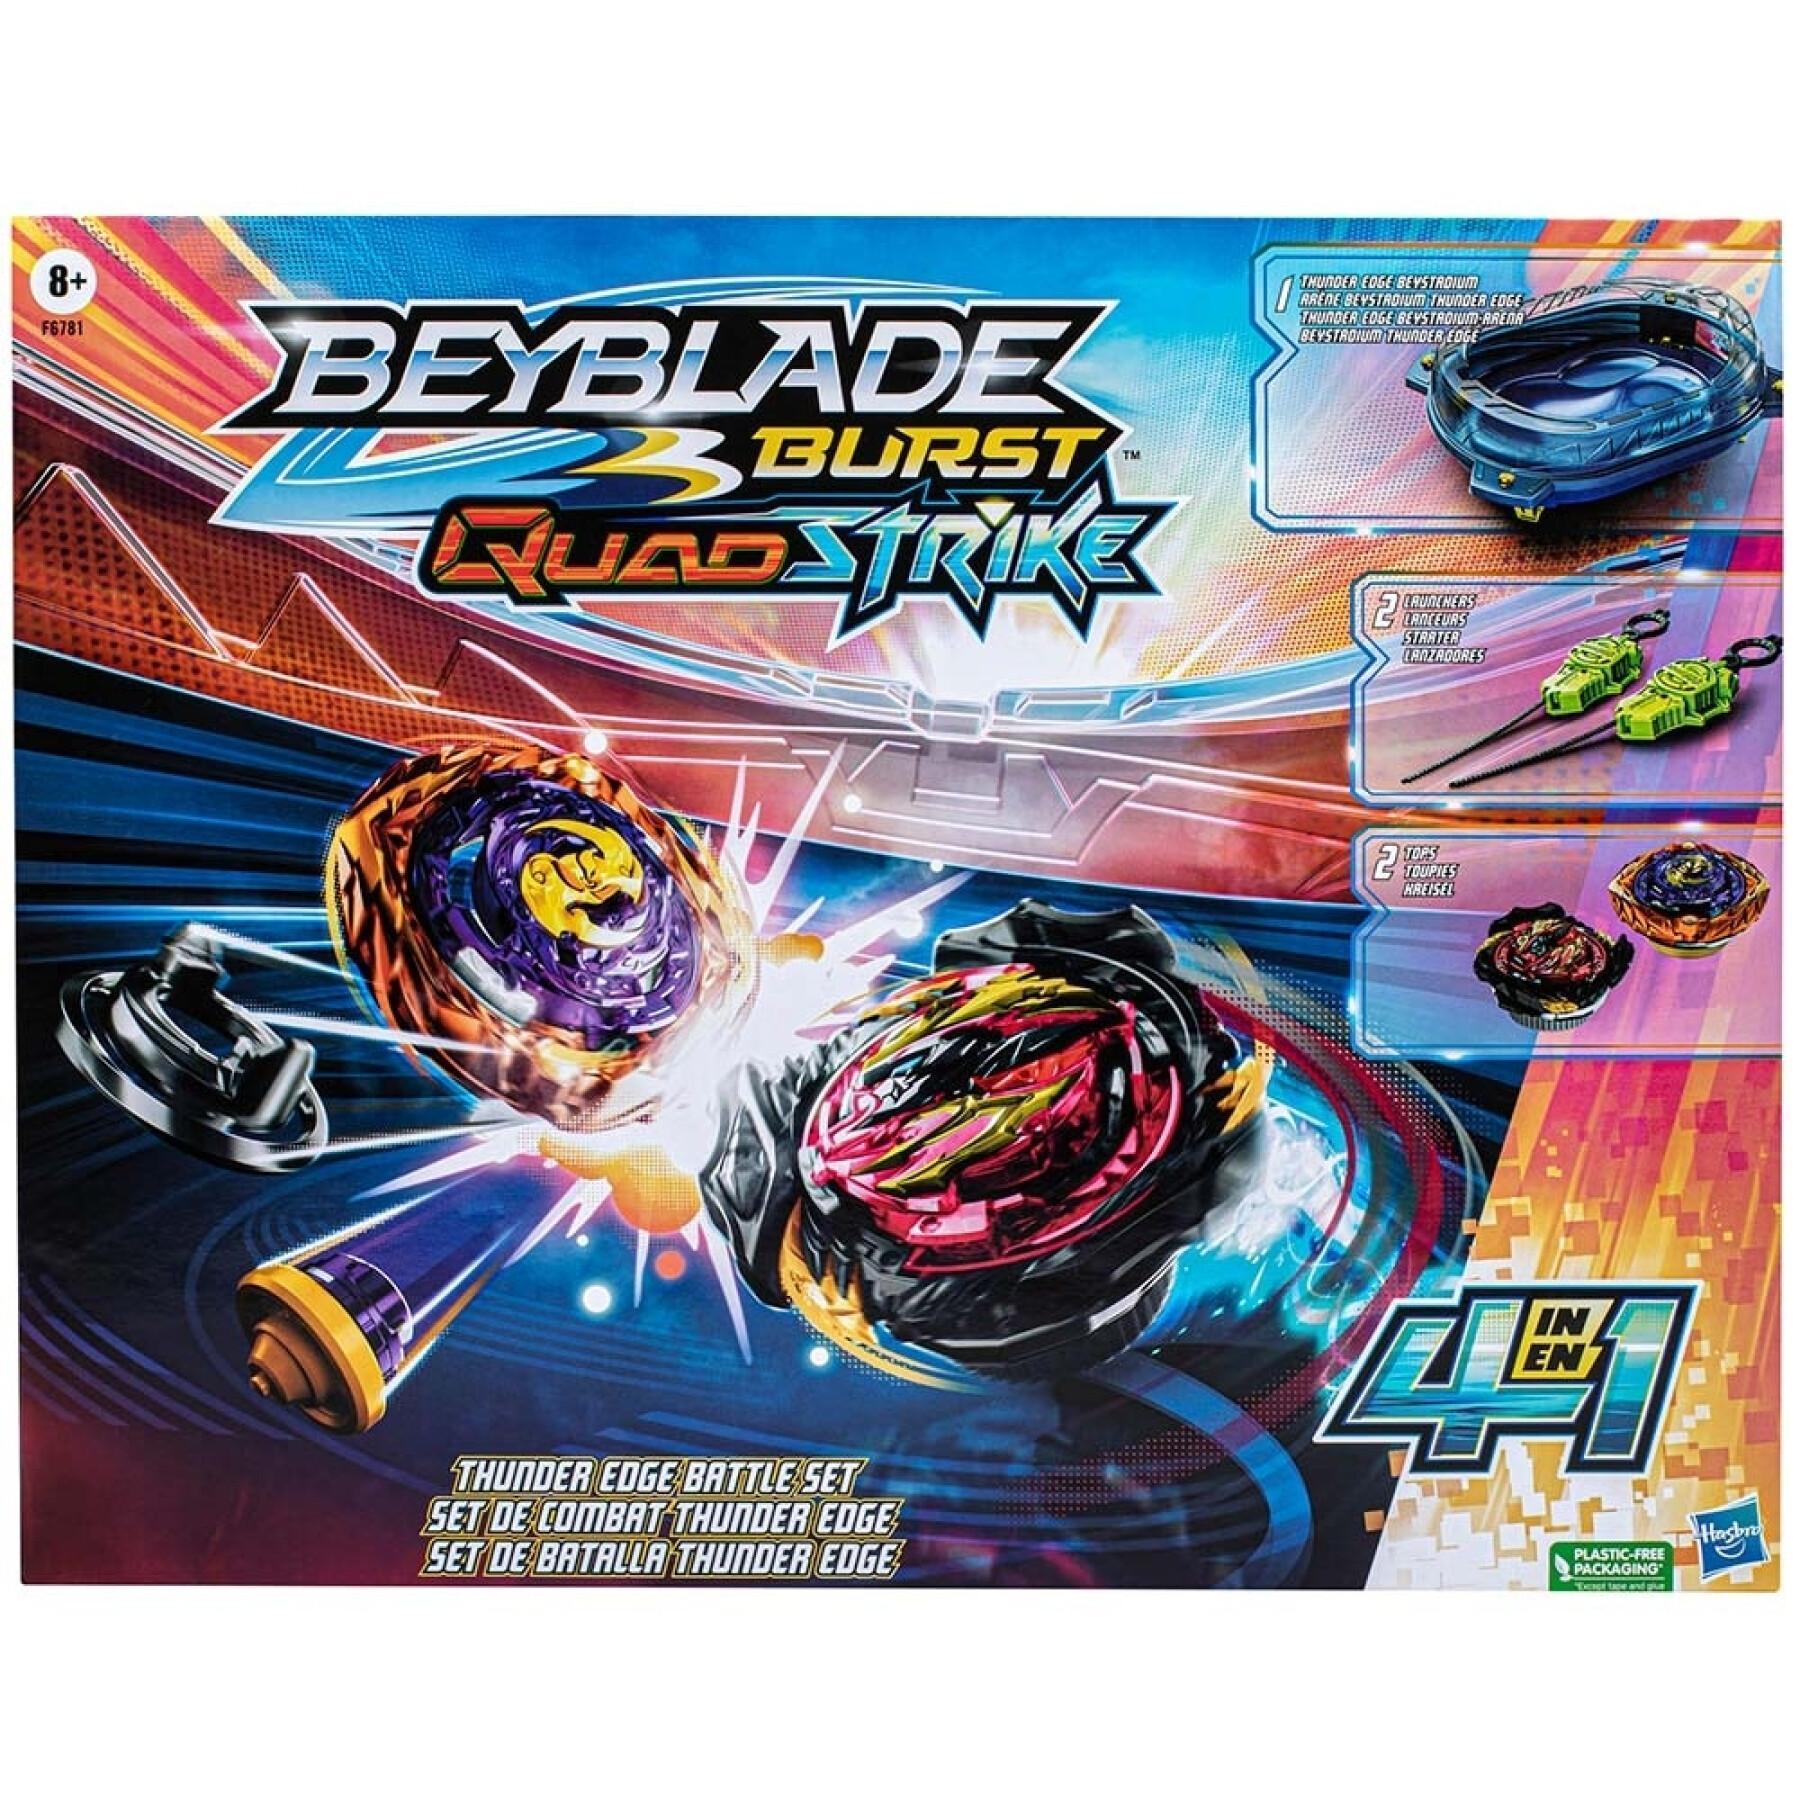 Bayblade quadstrike top Hasbro